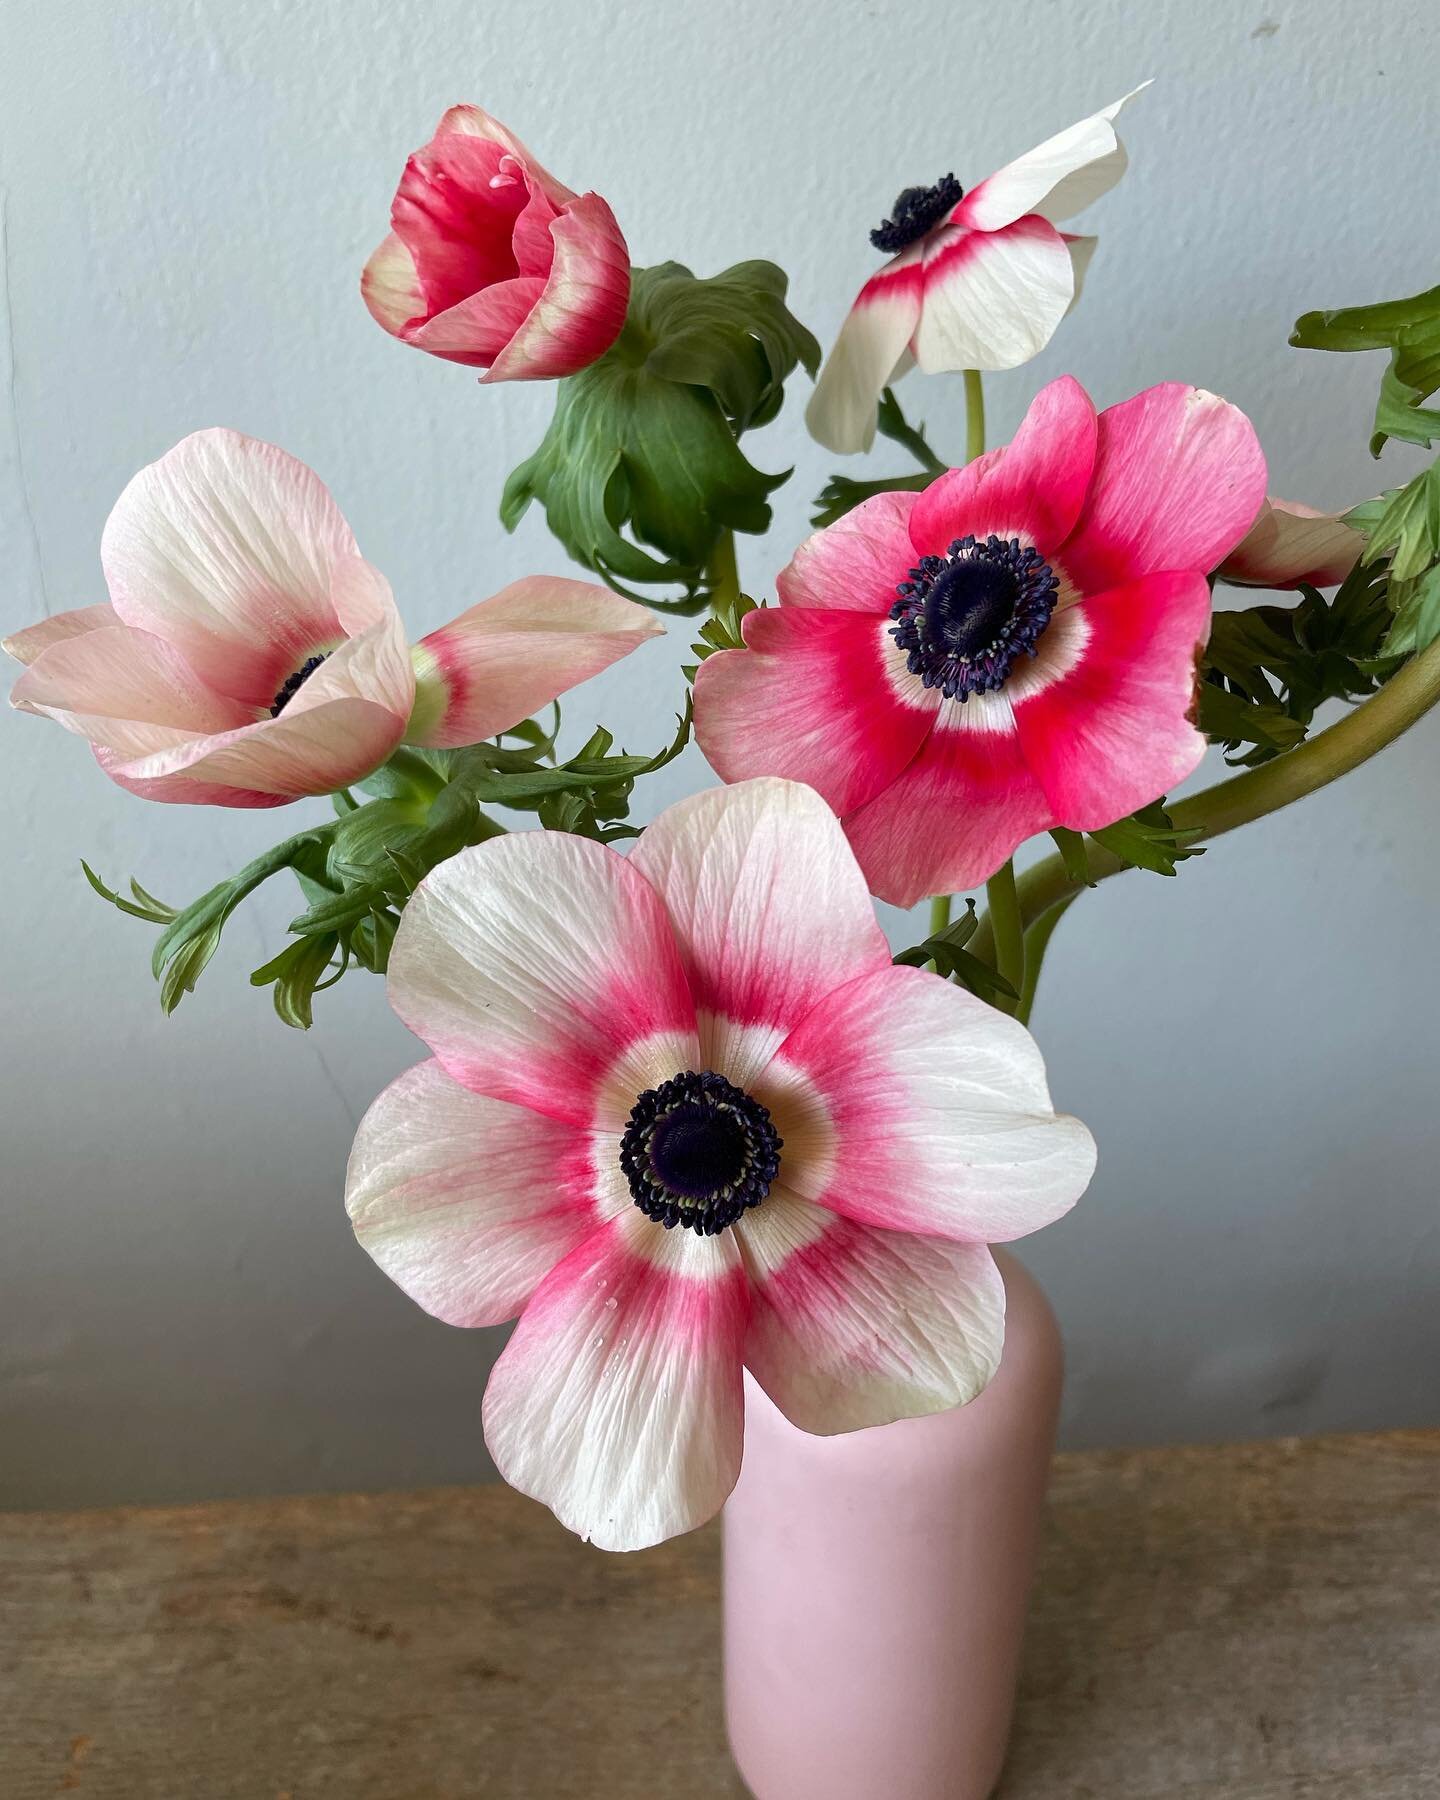 Loving the local Anemones 🥰
@vangameren_flowers 

#anemones #springflowers #yvrflorist #anemoneflowers